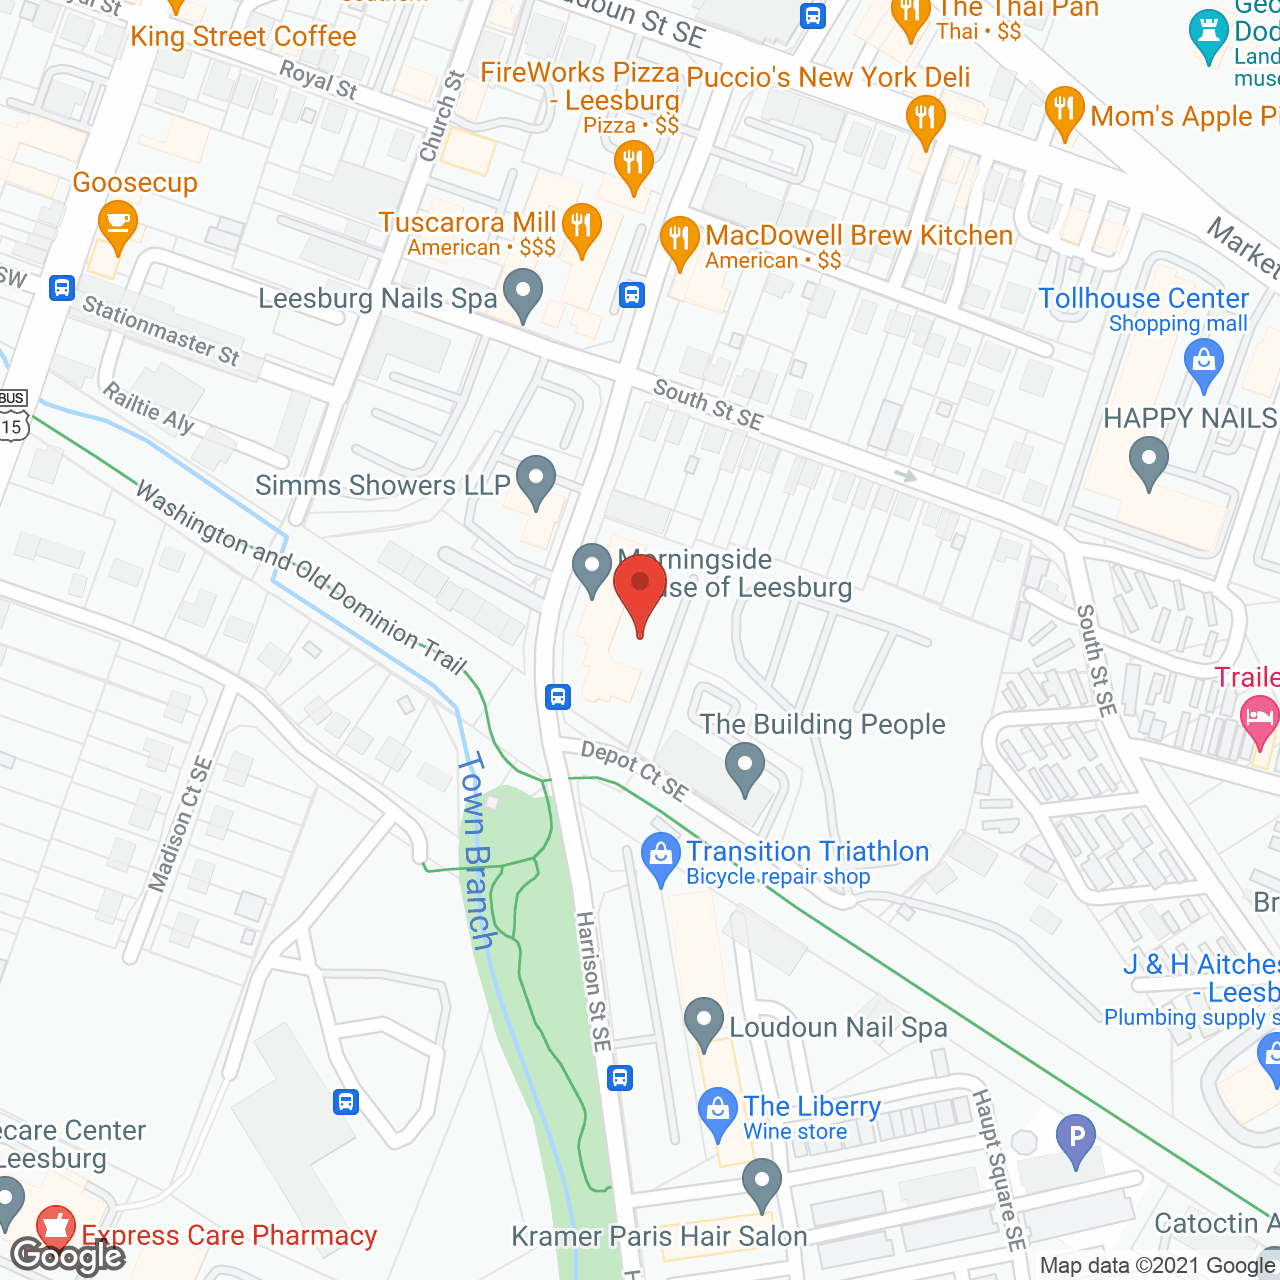 Morningside House of Leesburg in google map